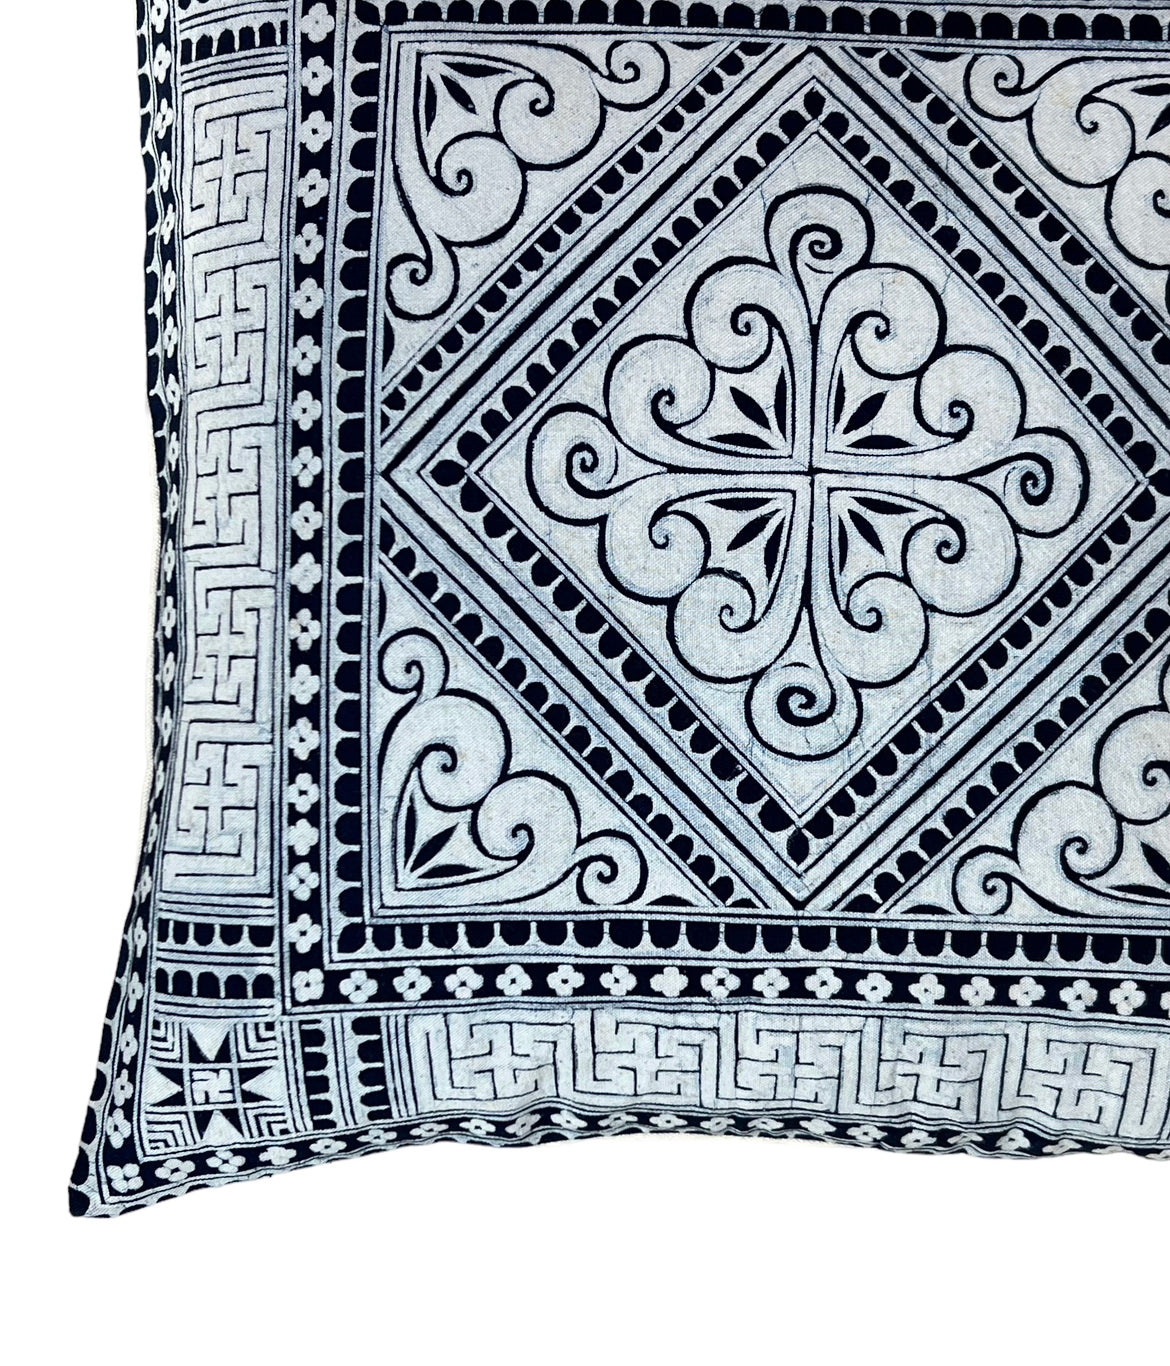 Indigo pillows handmade in China